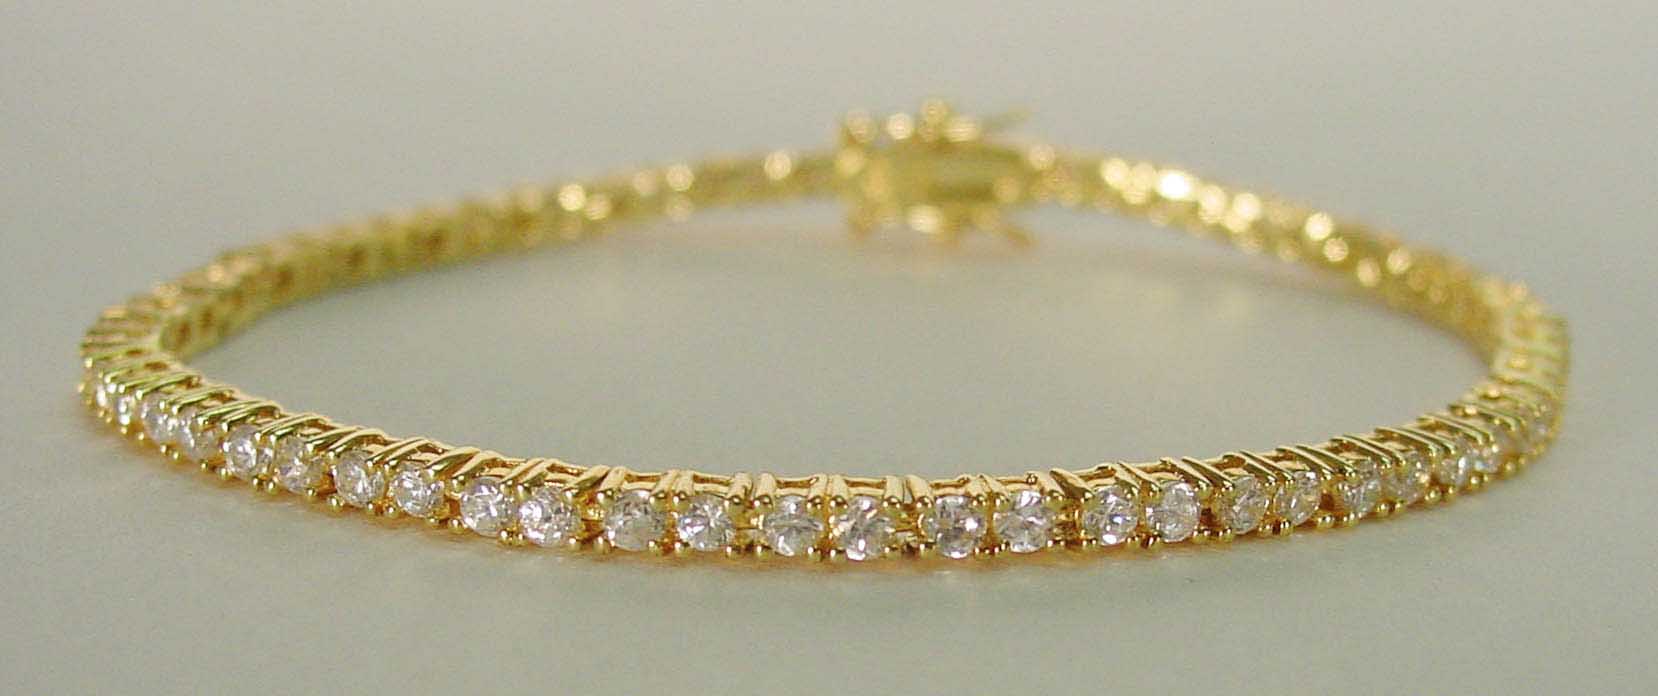 Clear CZ gold bracelet